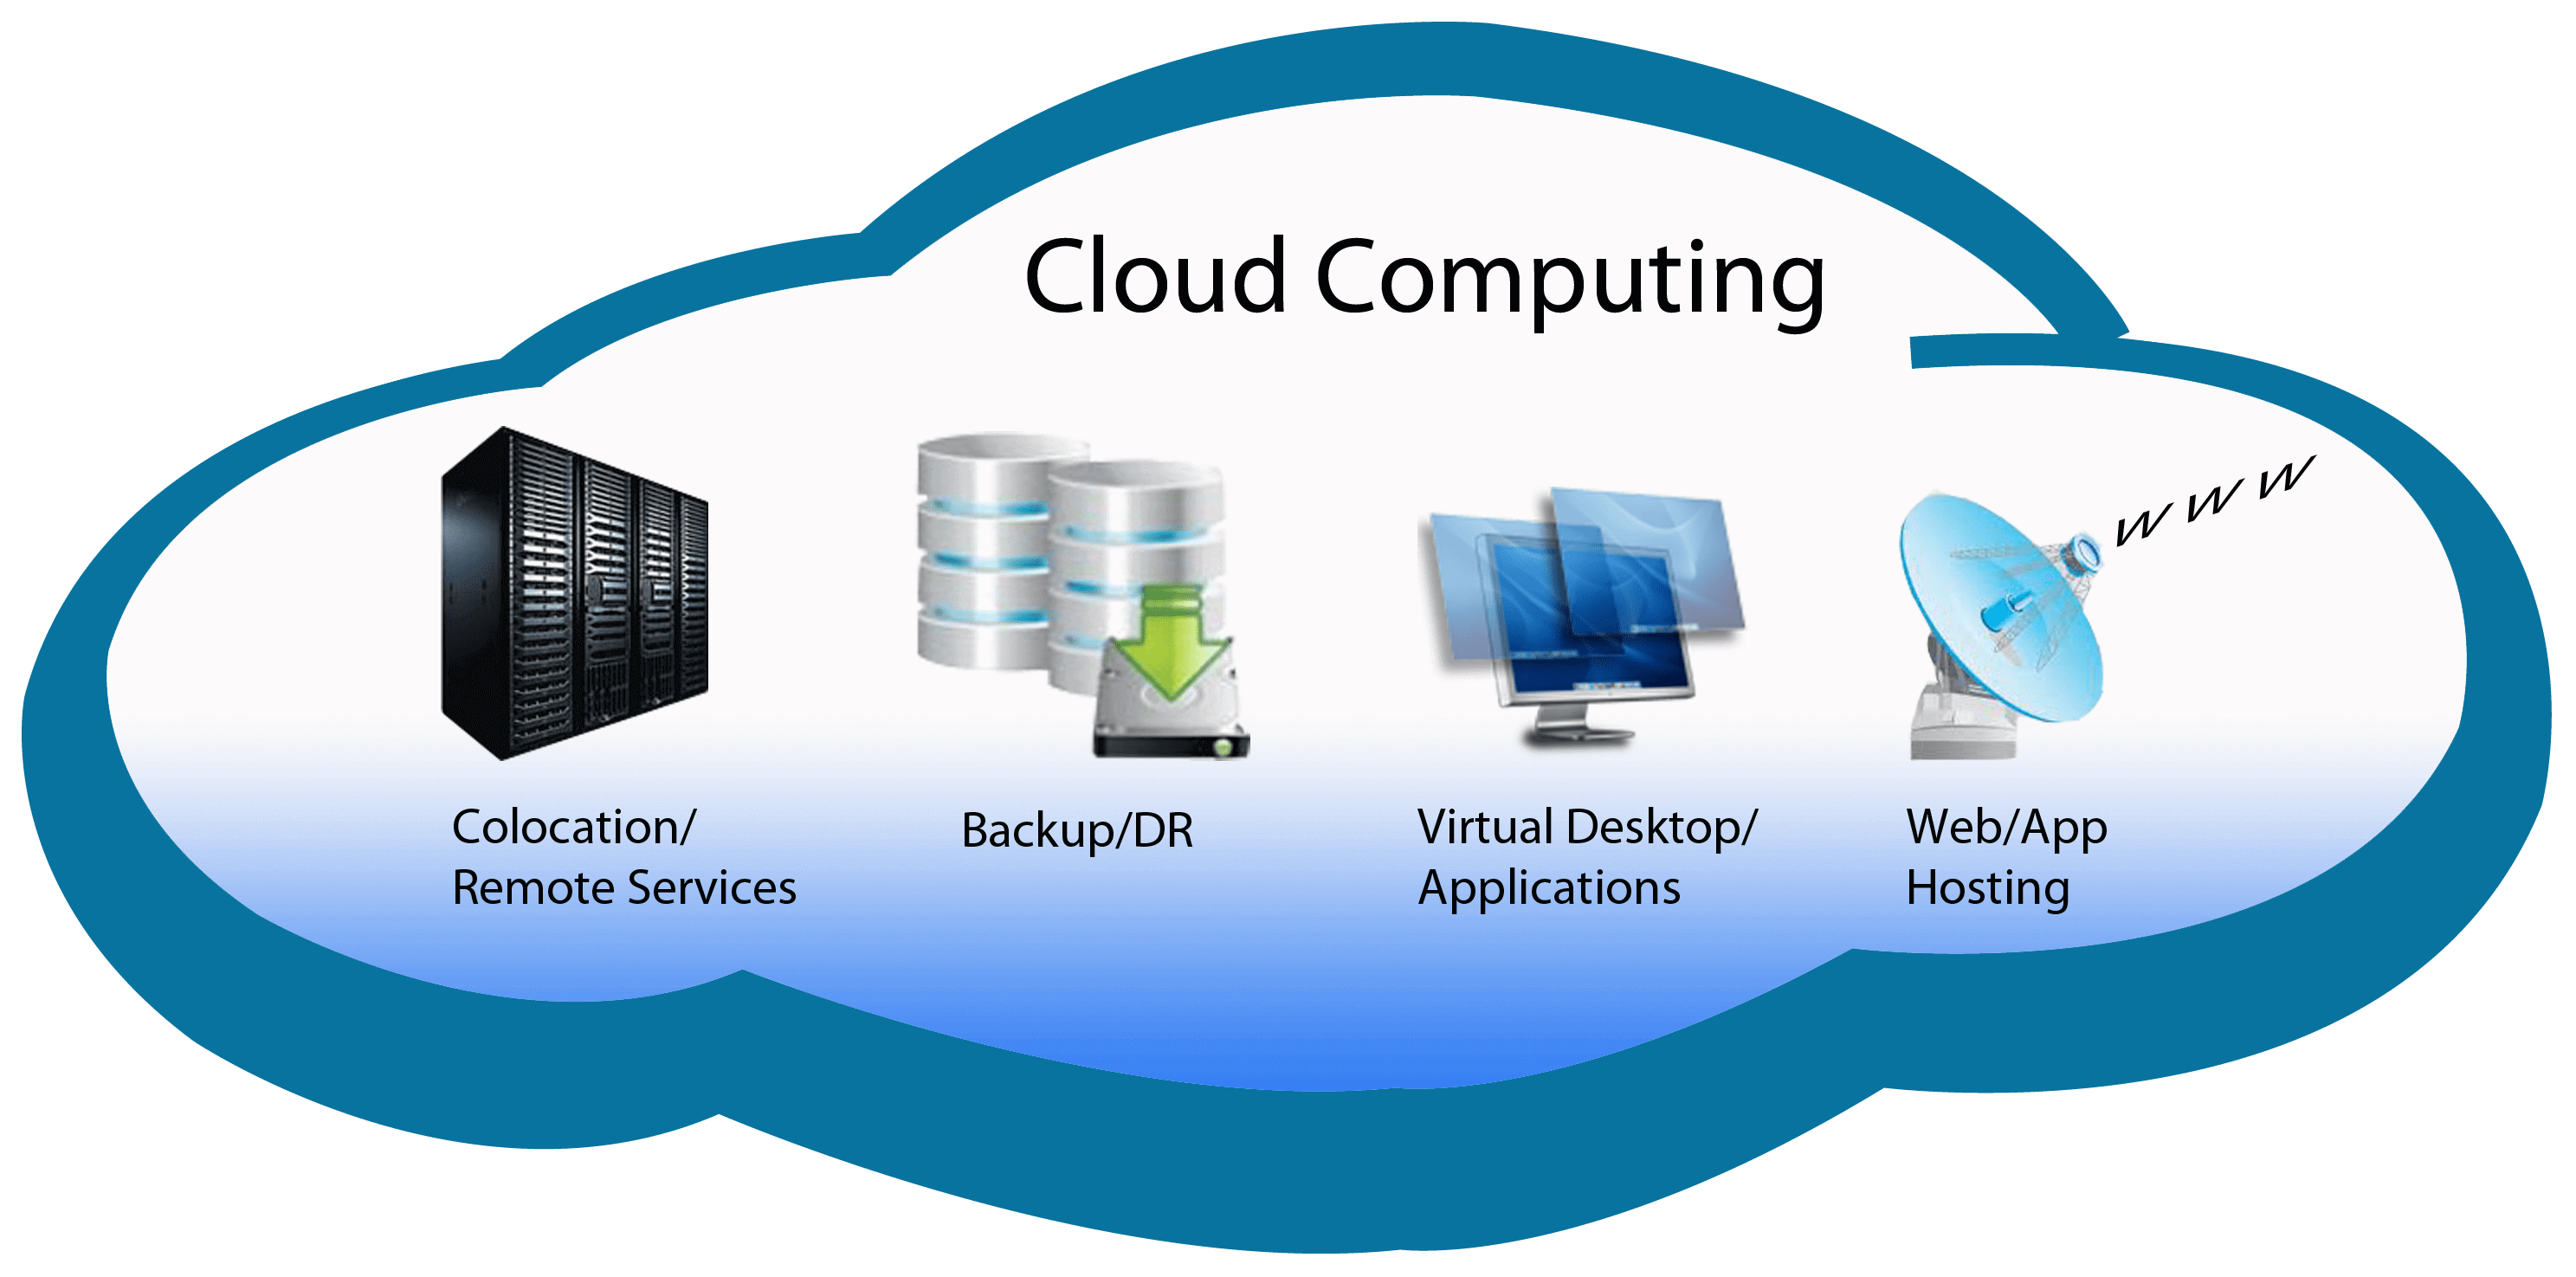 Cloud Computing Assignment Help